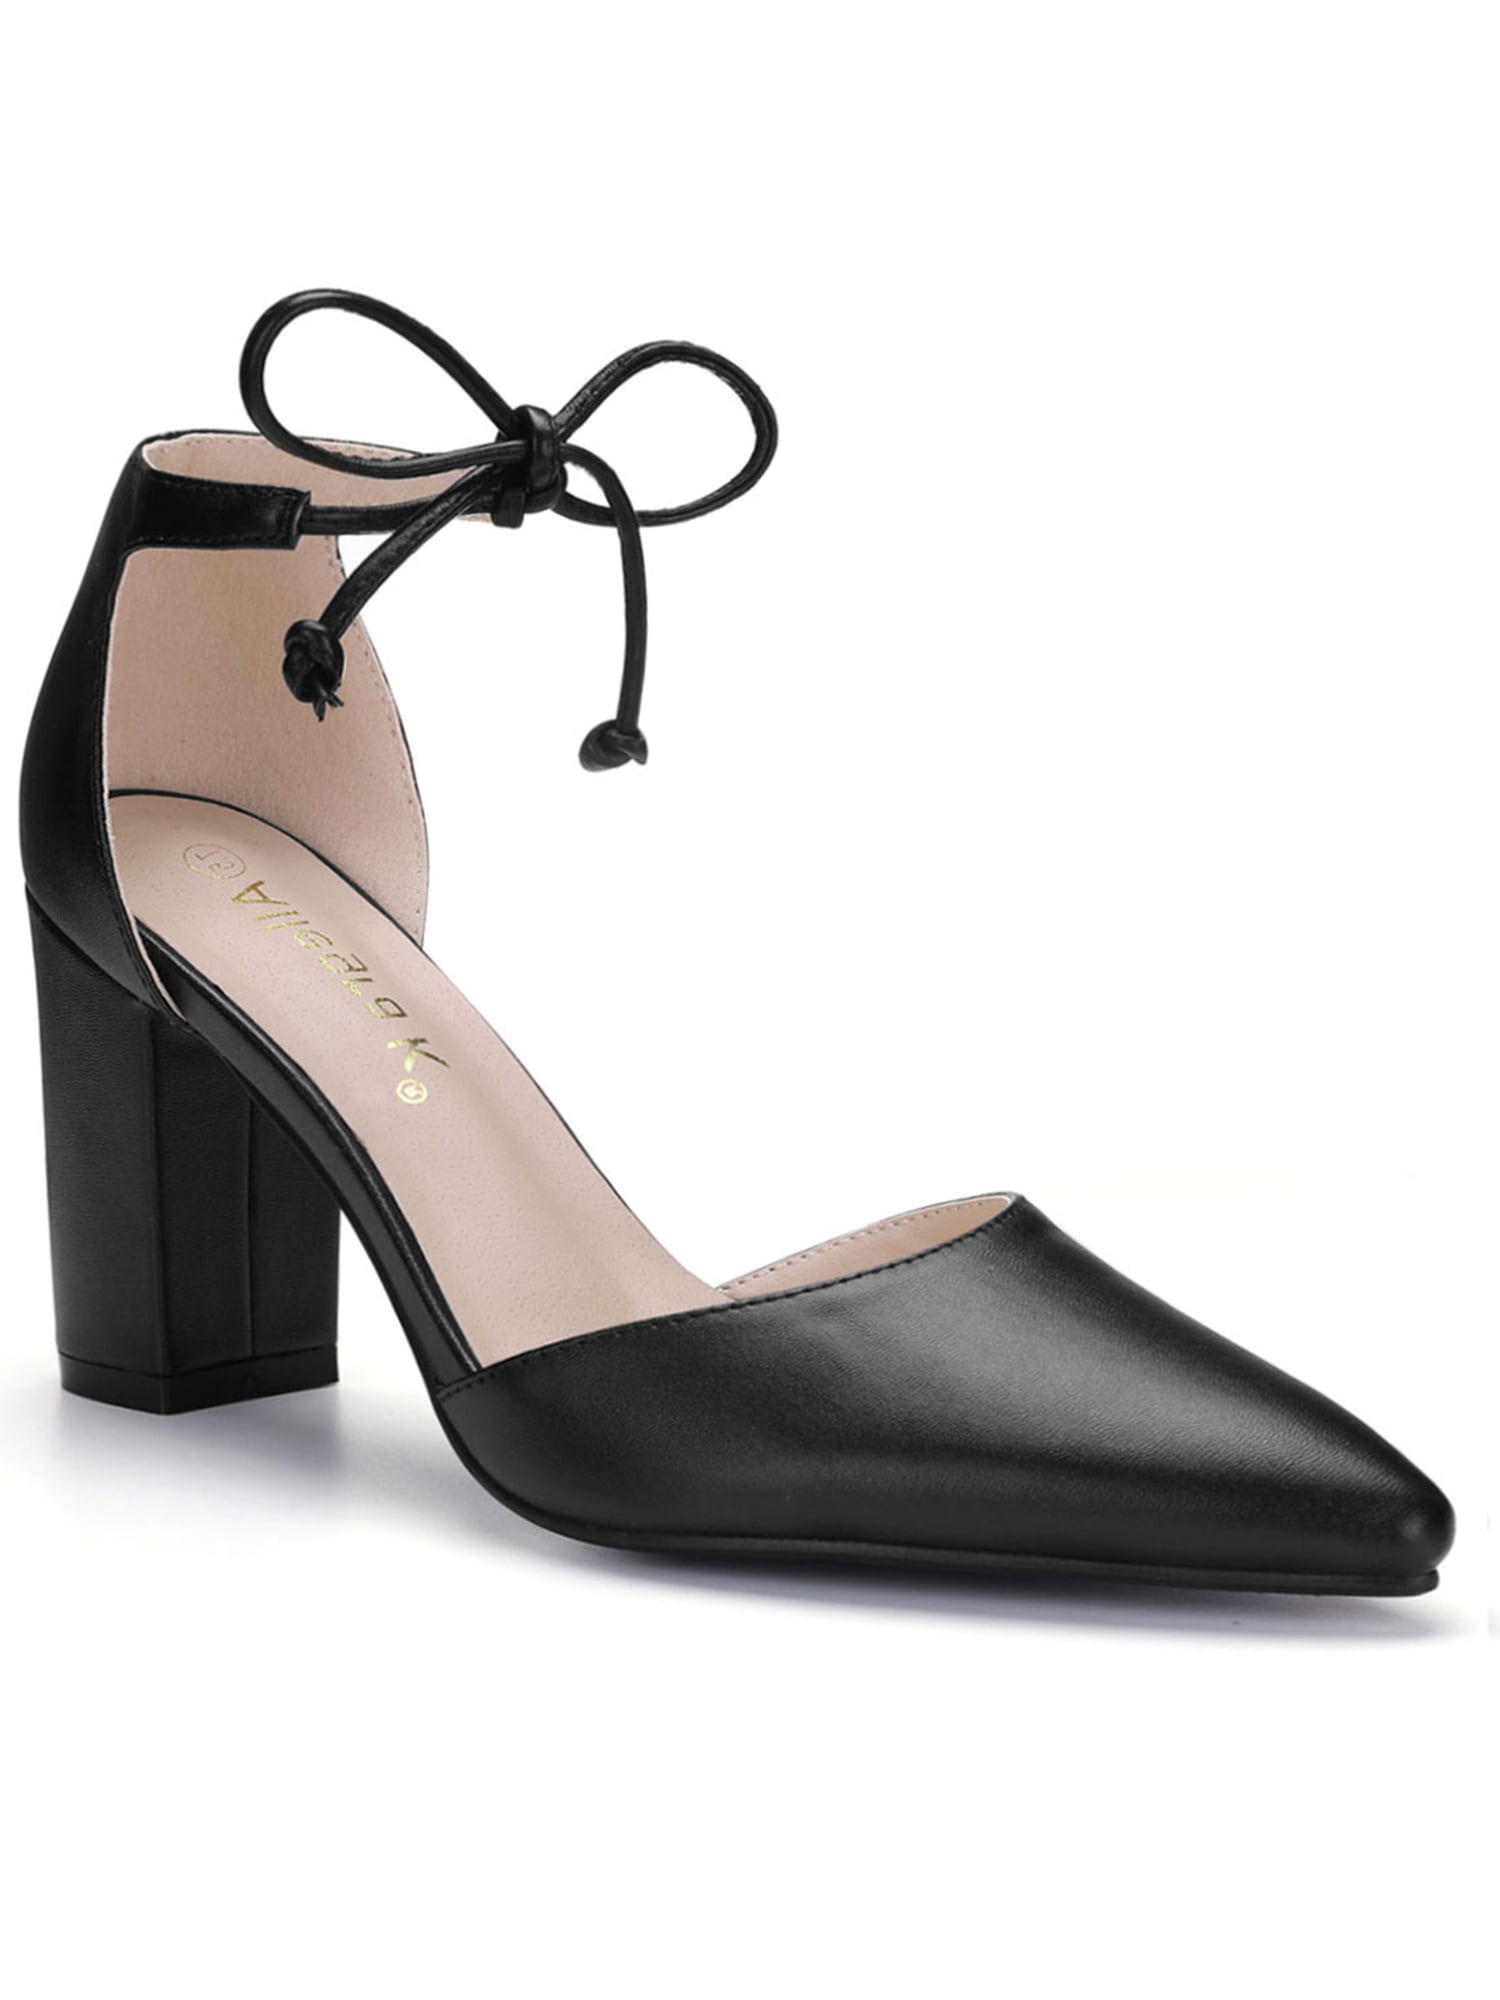 Details about   Women Mary Janes Pumps Shoes Bow Tie Ankle Strap Block Low Heel Dress Sandals